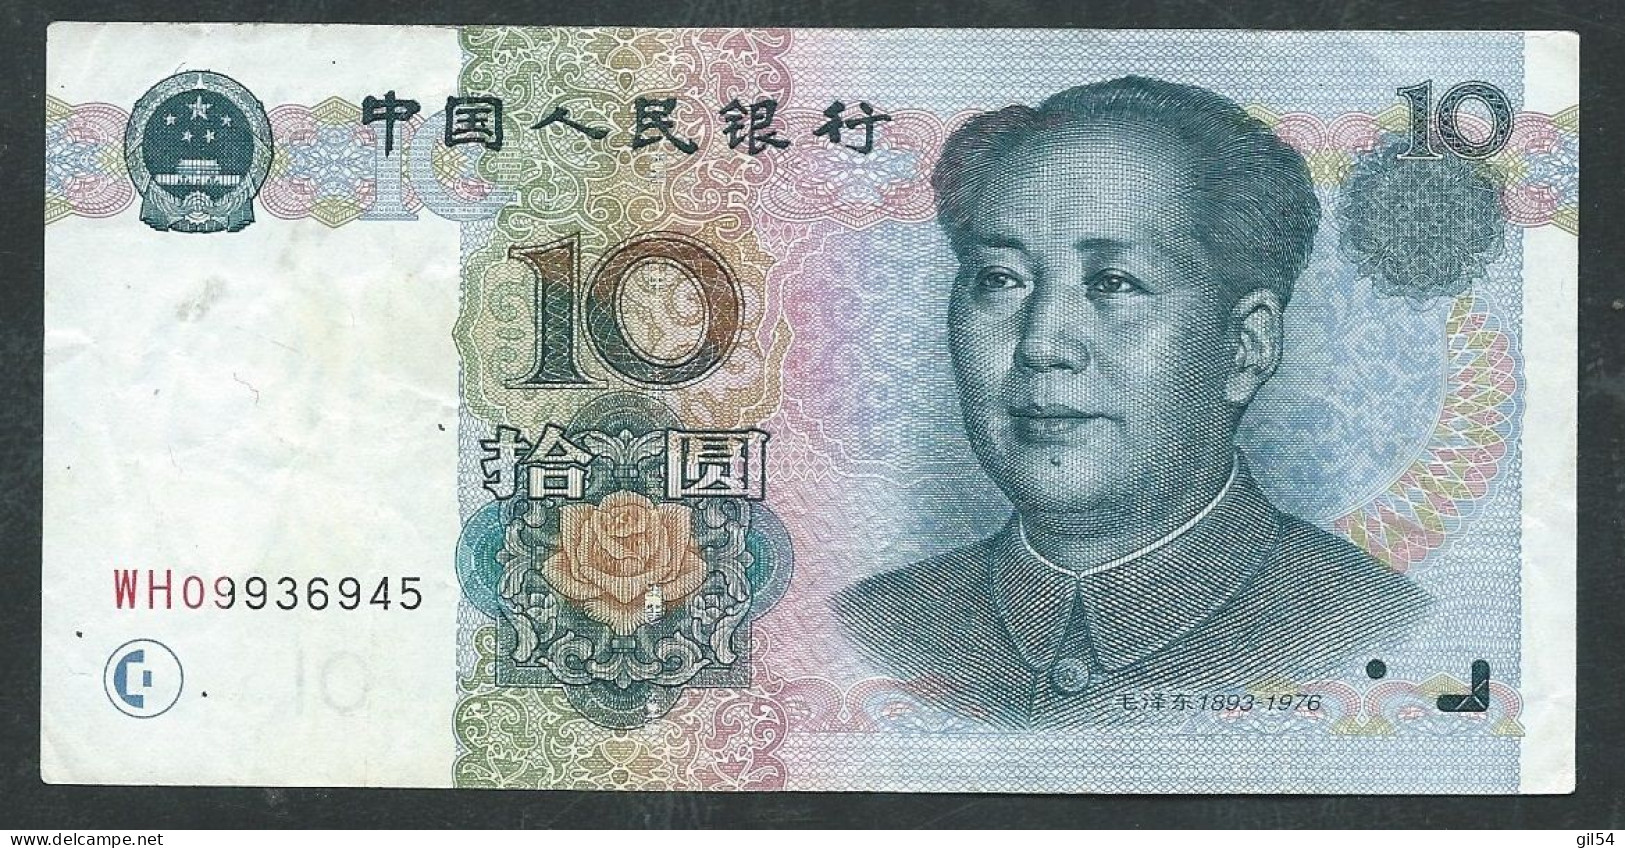 CHINE - CHINA BANKNOTE - 10 YUAN 1999 - WH09936945 - Laura 7124 - Chine